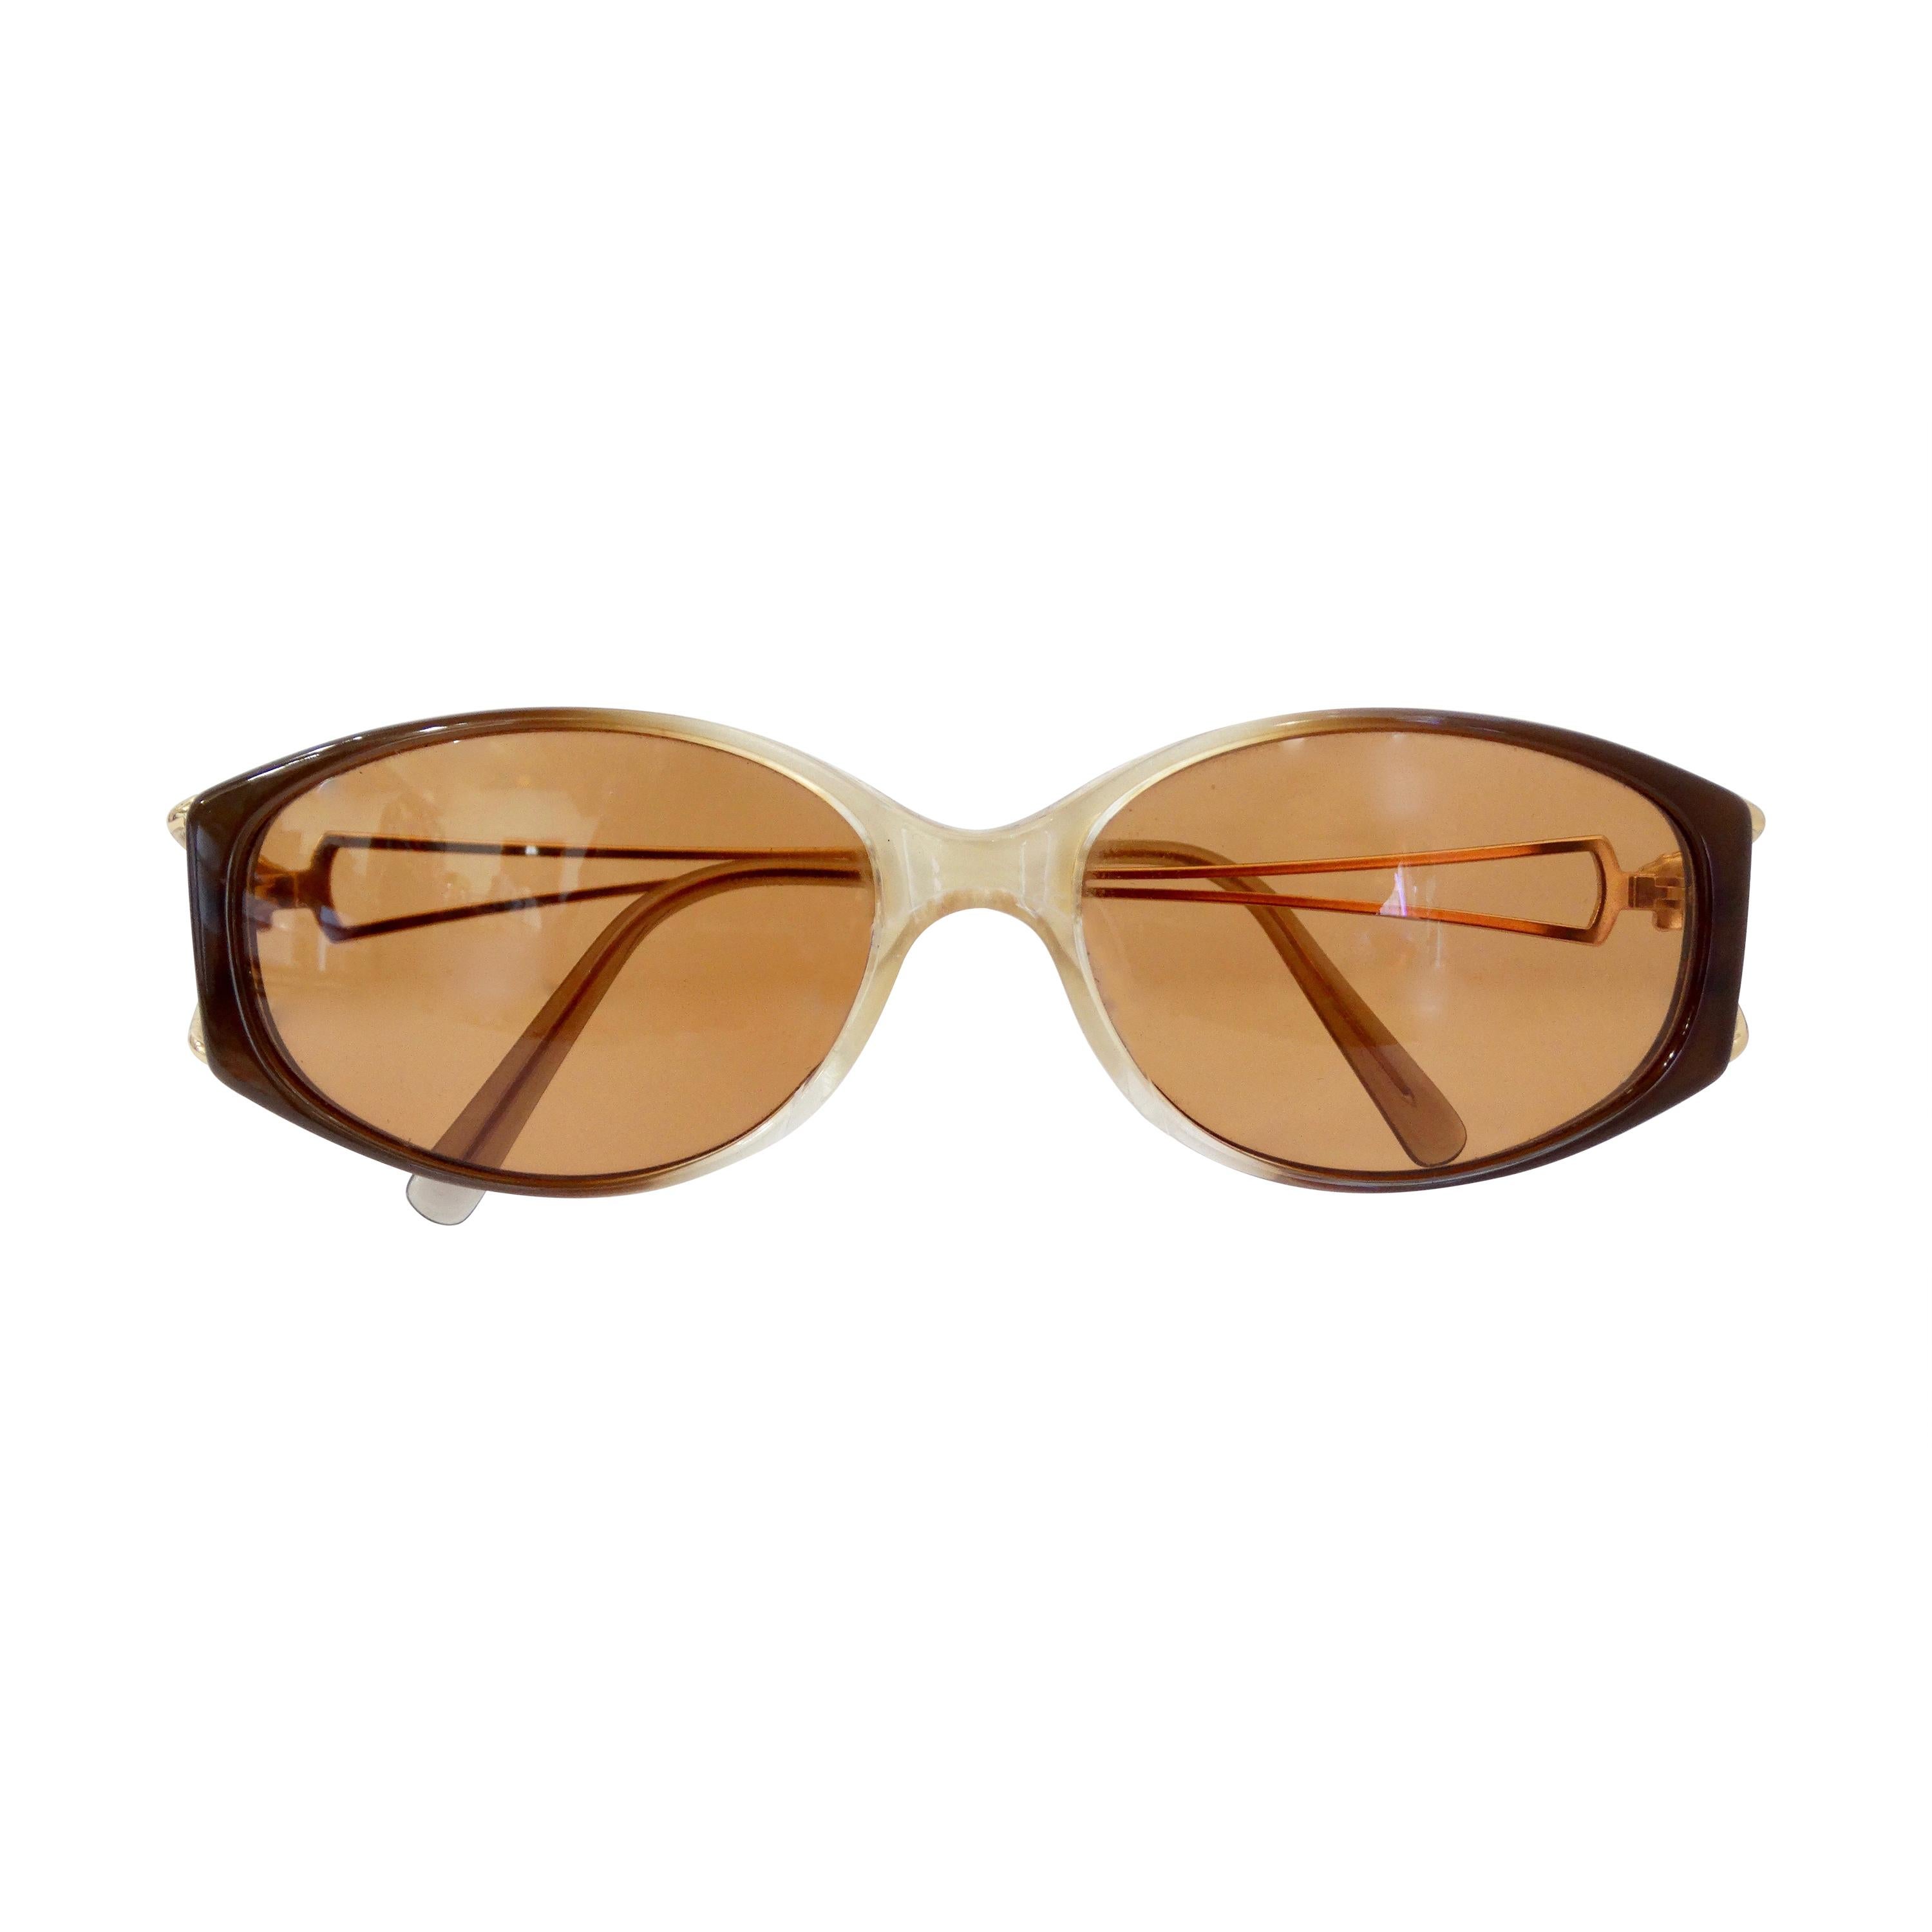 Gianni Versace 1990s Gradient Frame Sunglasses 